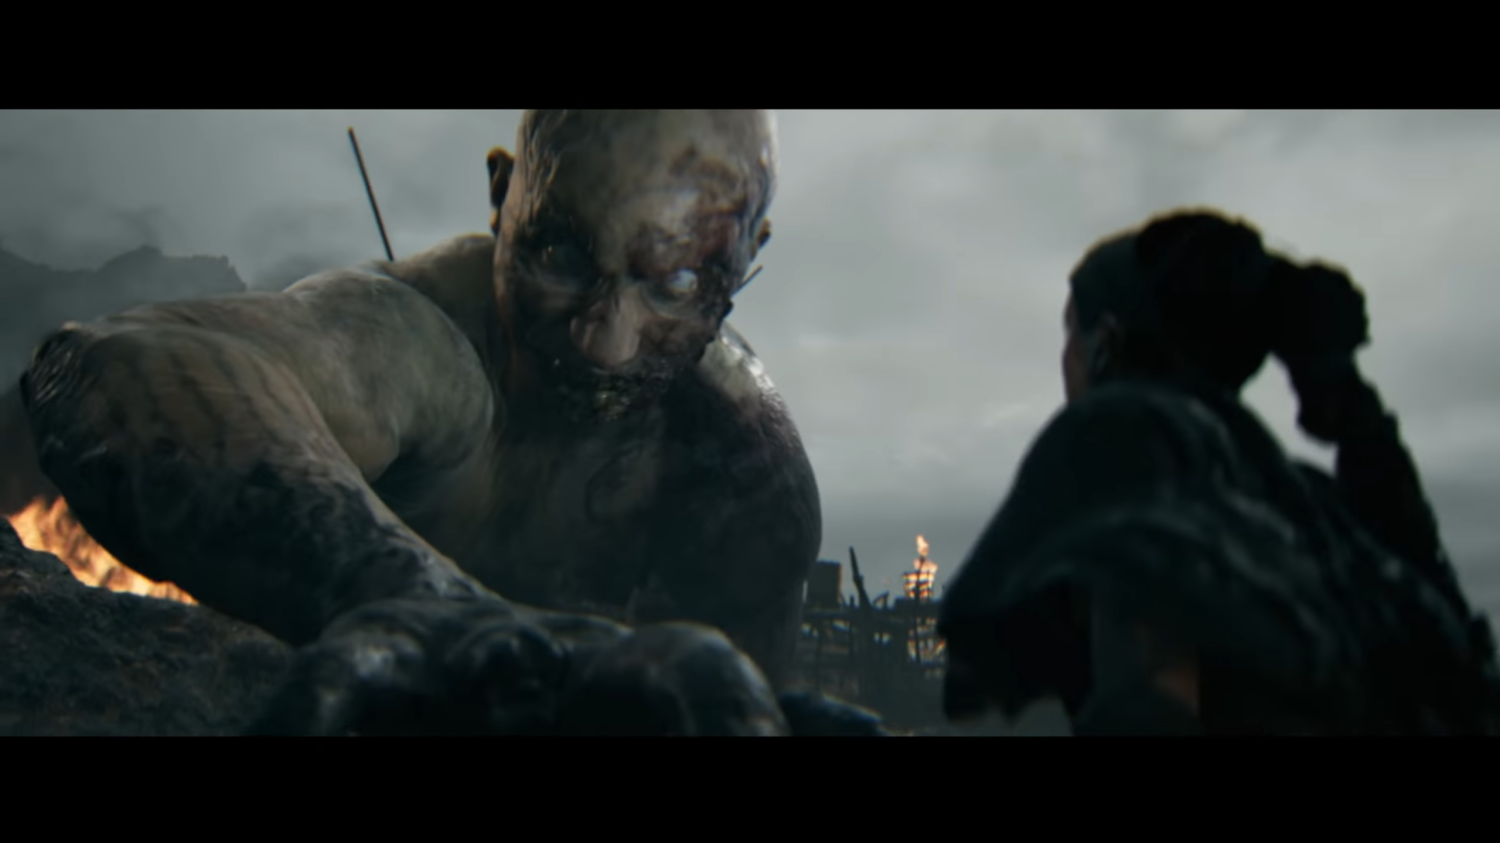 Hellblade 2's new trailer is frighteningly immersive